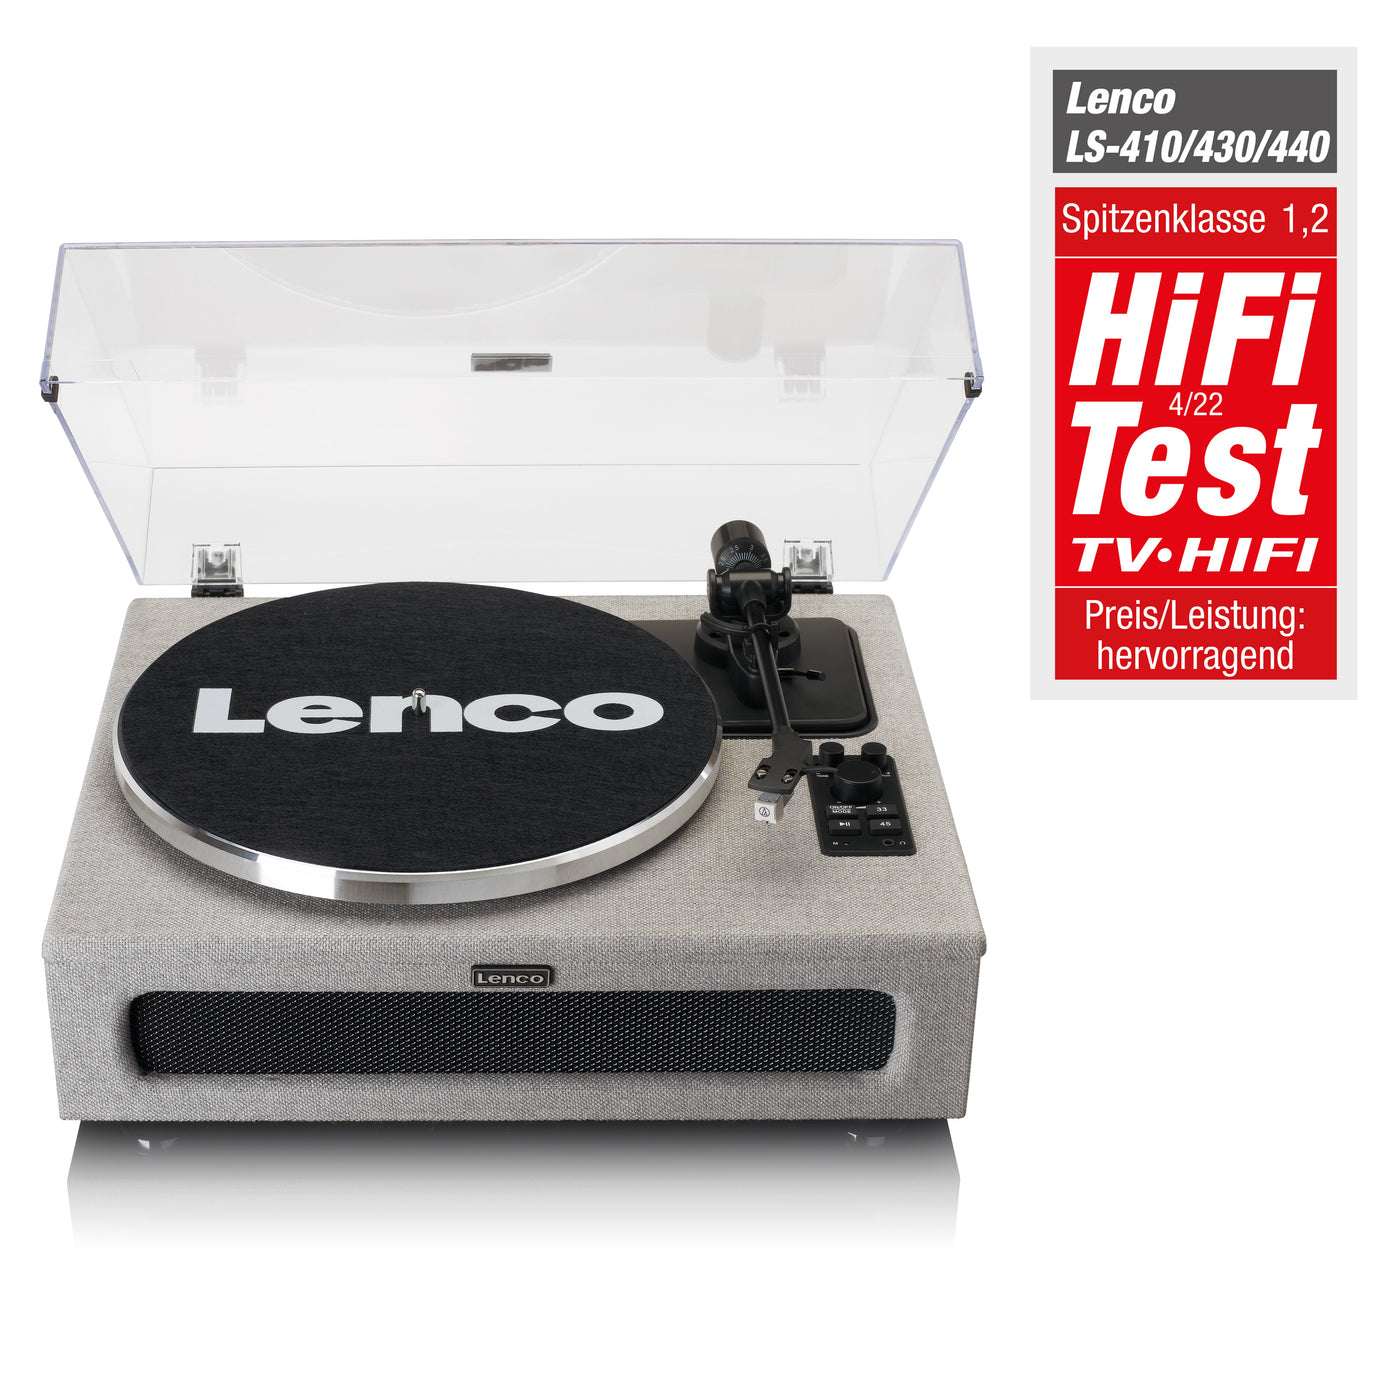 | Lenco.de Lenco im offiziellen – Webshop LS-440GY kaufen? Lenco Offizieller Jetzt - Webshop